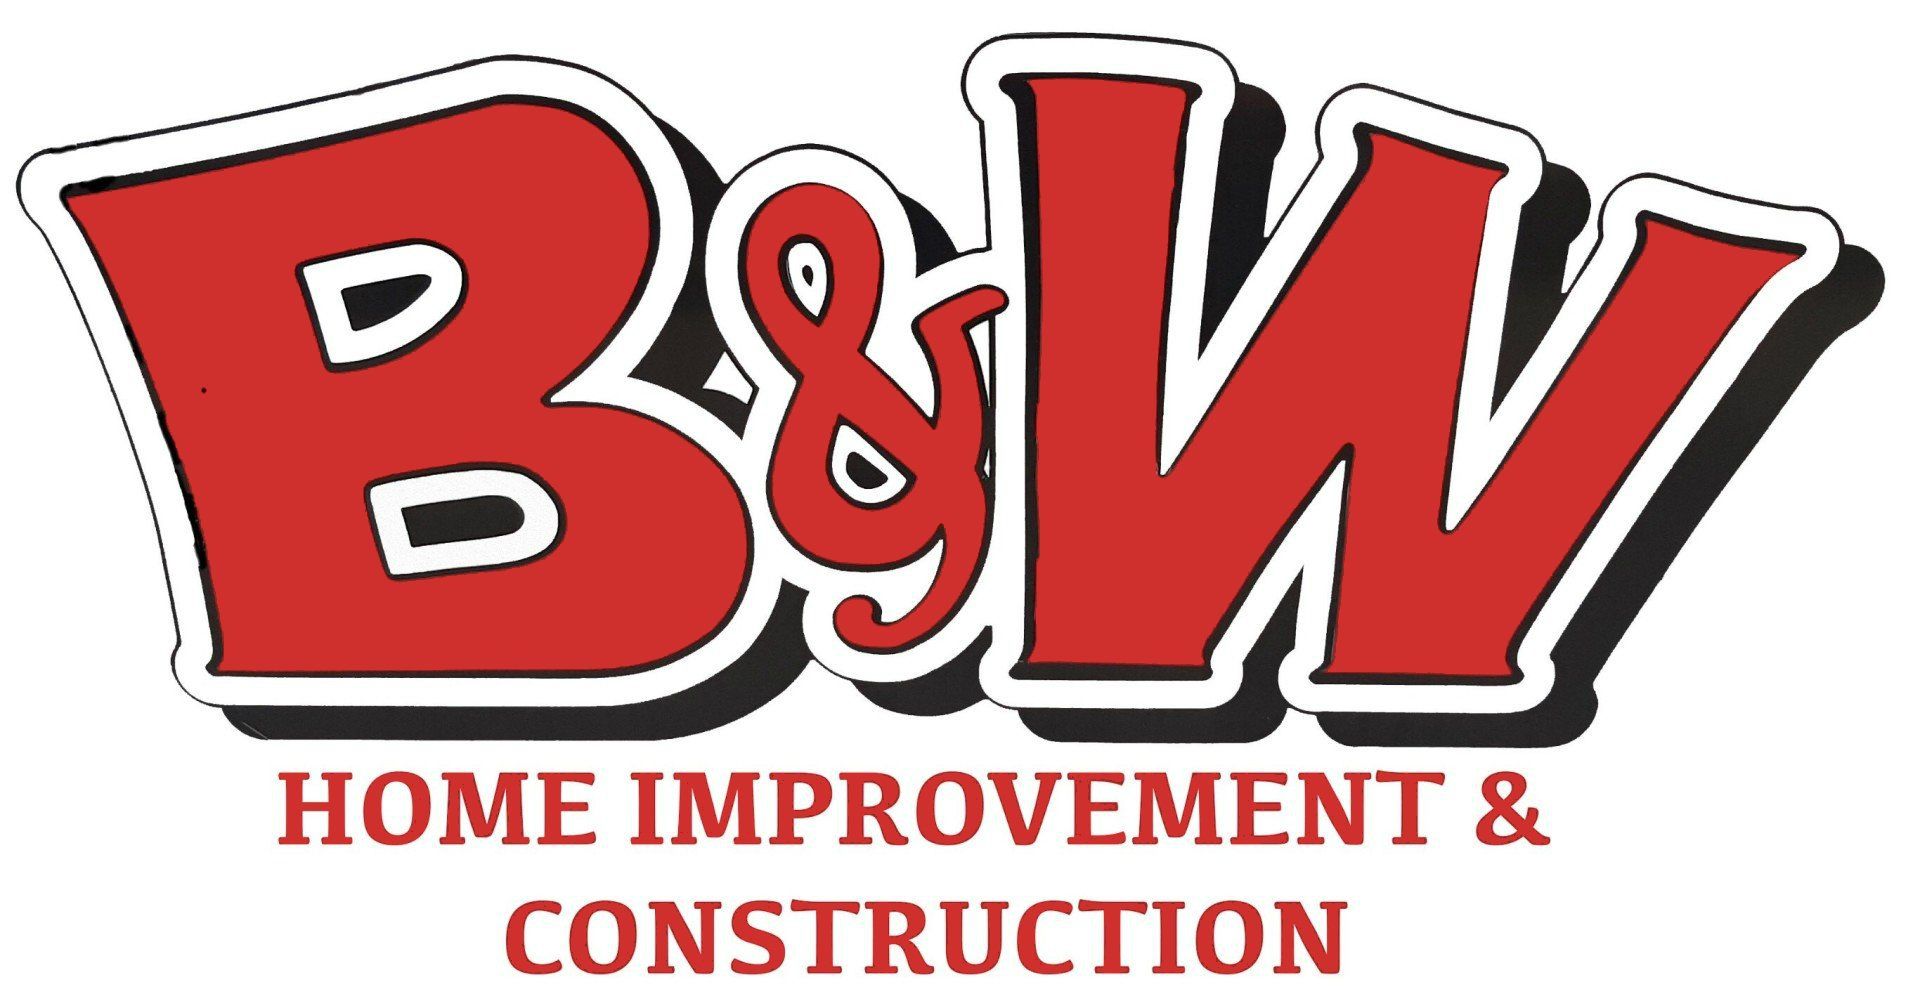 B&W Home Improvement & Construction - Logo